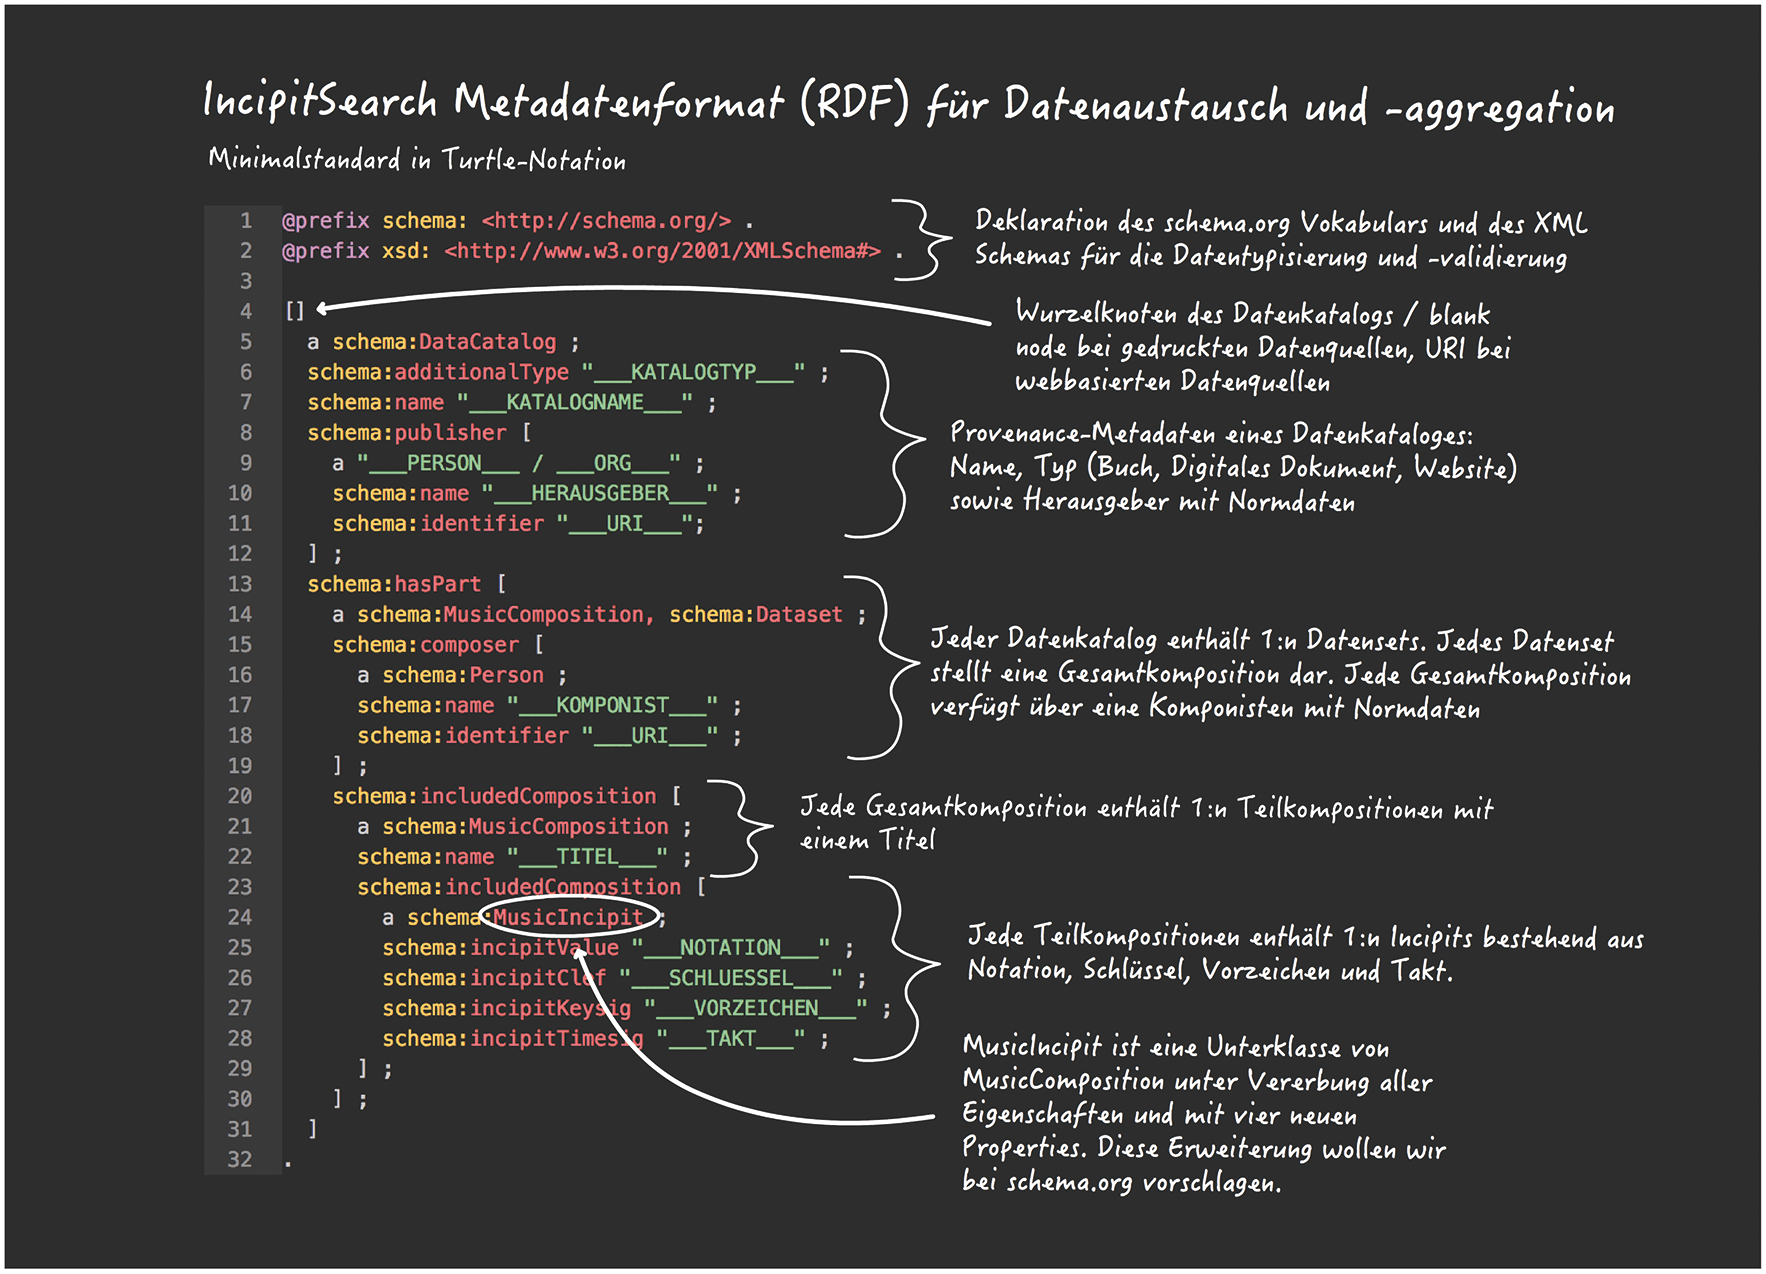 Illustration of the IncipitSearch metadatenformat